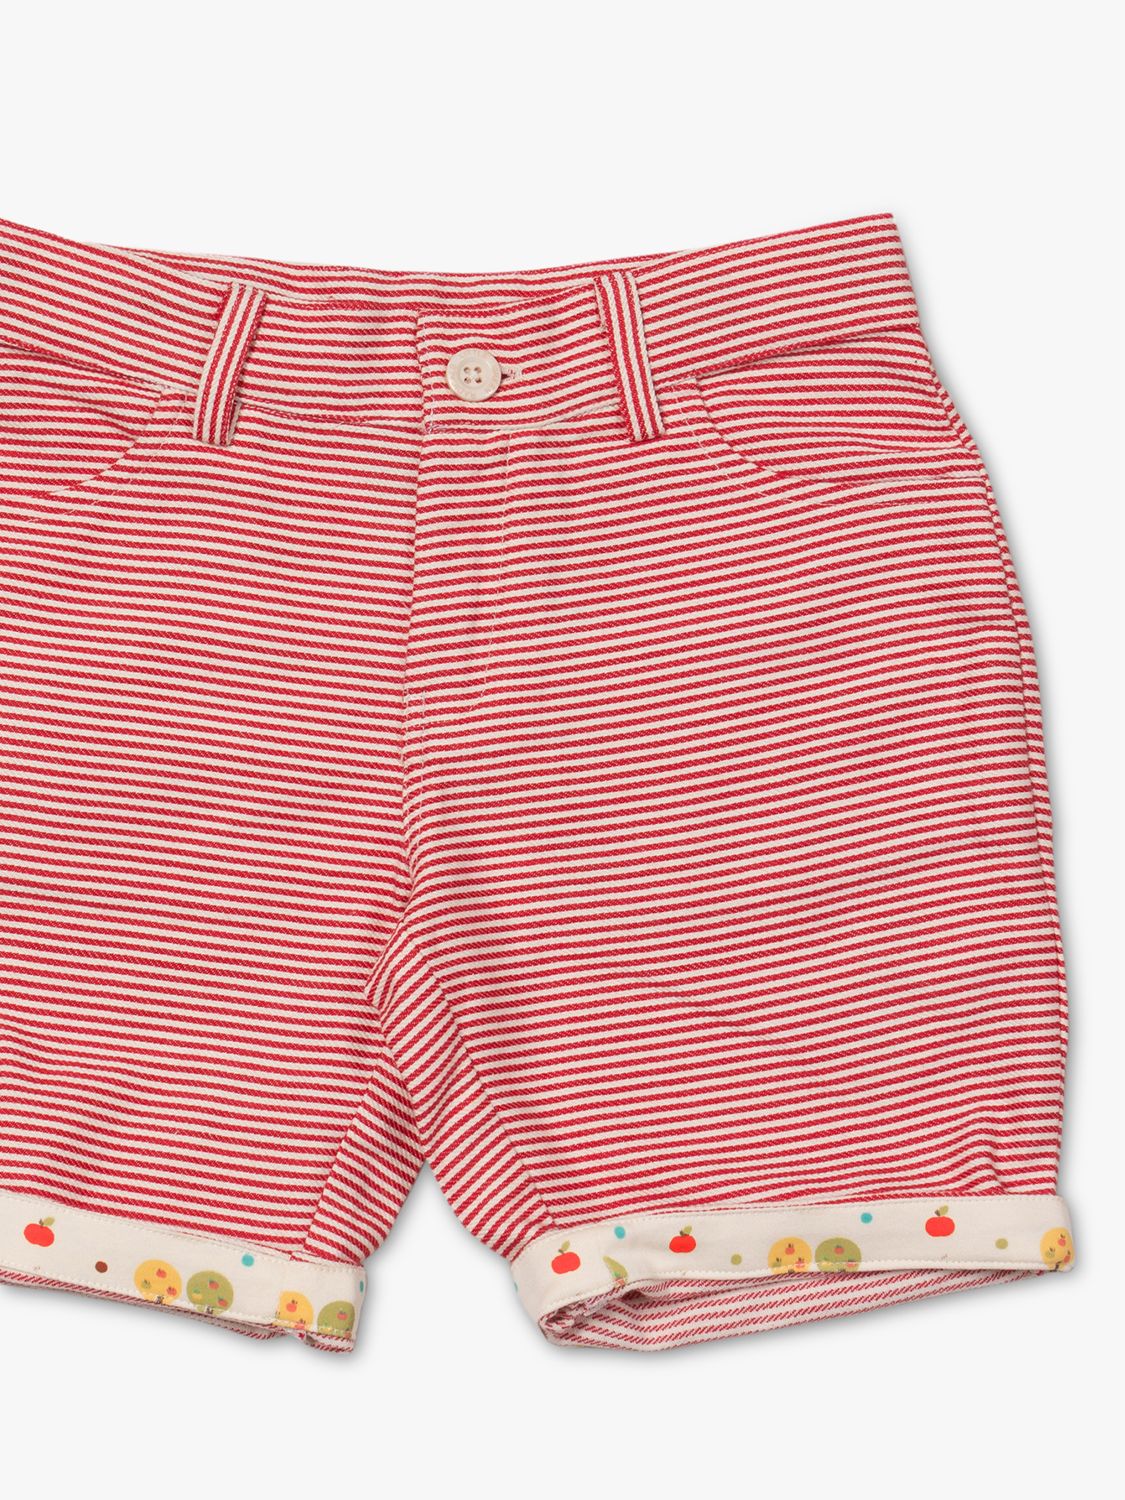 Little Green Radicals Baby Stripe Shorts, Red/Multi, 0-3 months